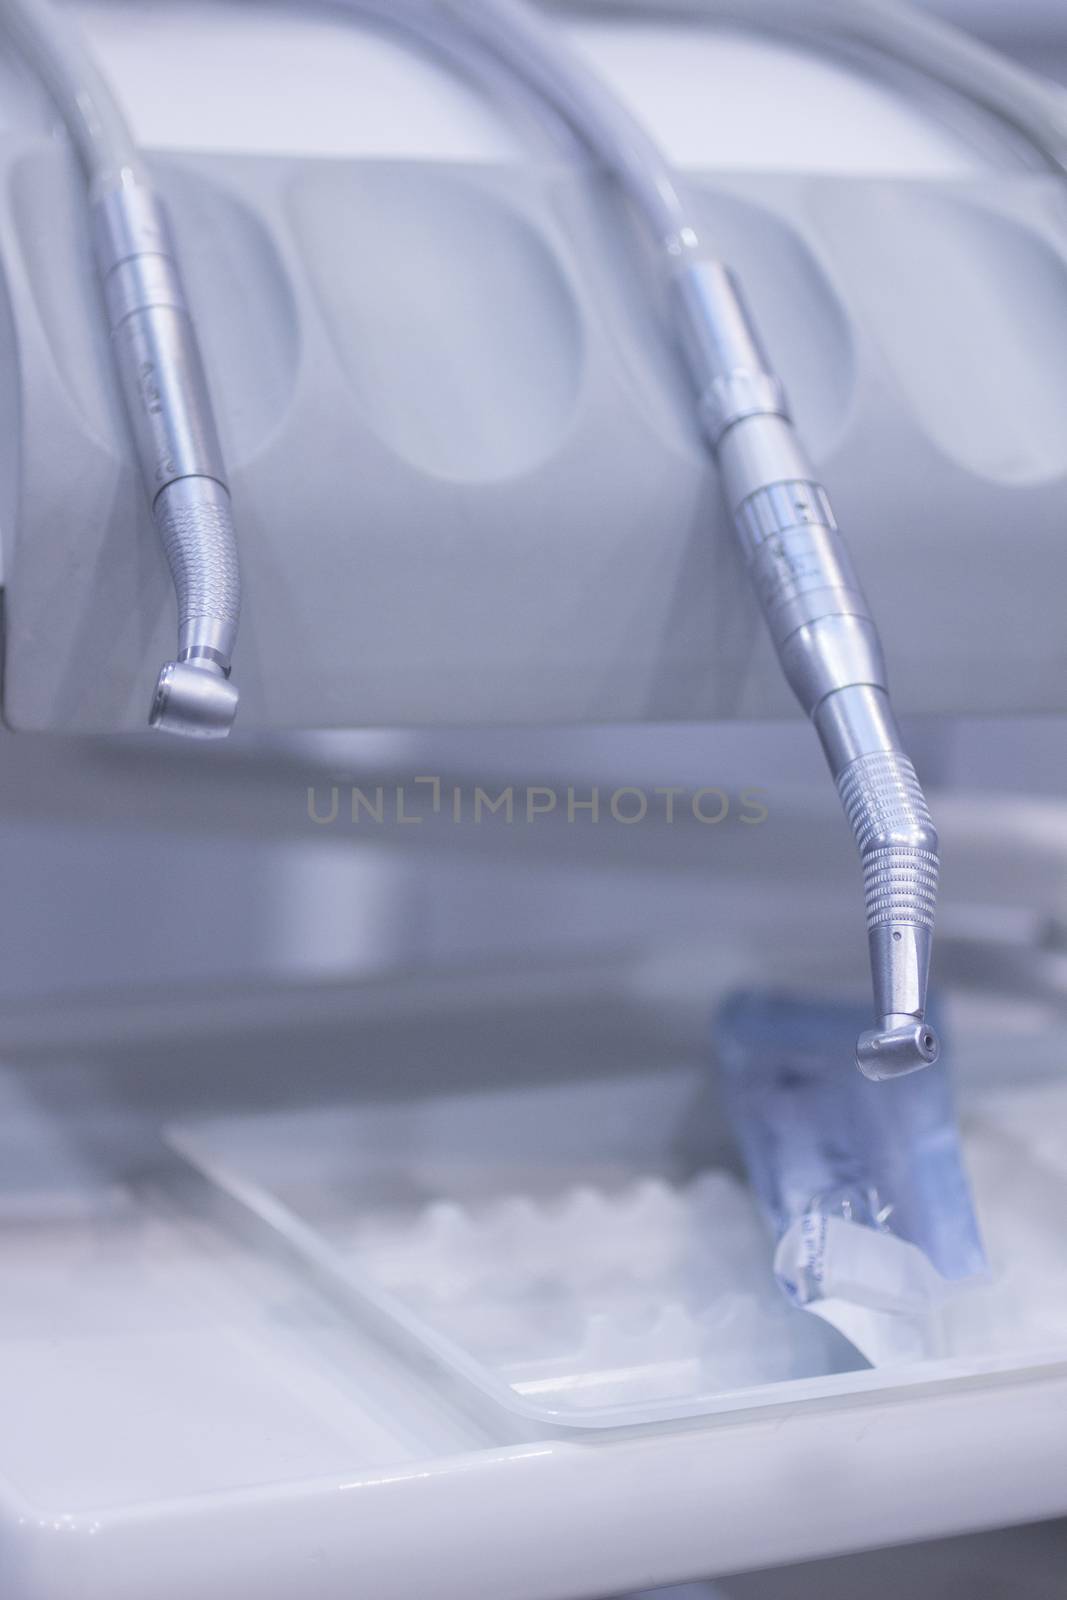 Dental instrumenation dentist drill cleaning tool denstists surg by edwardolive